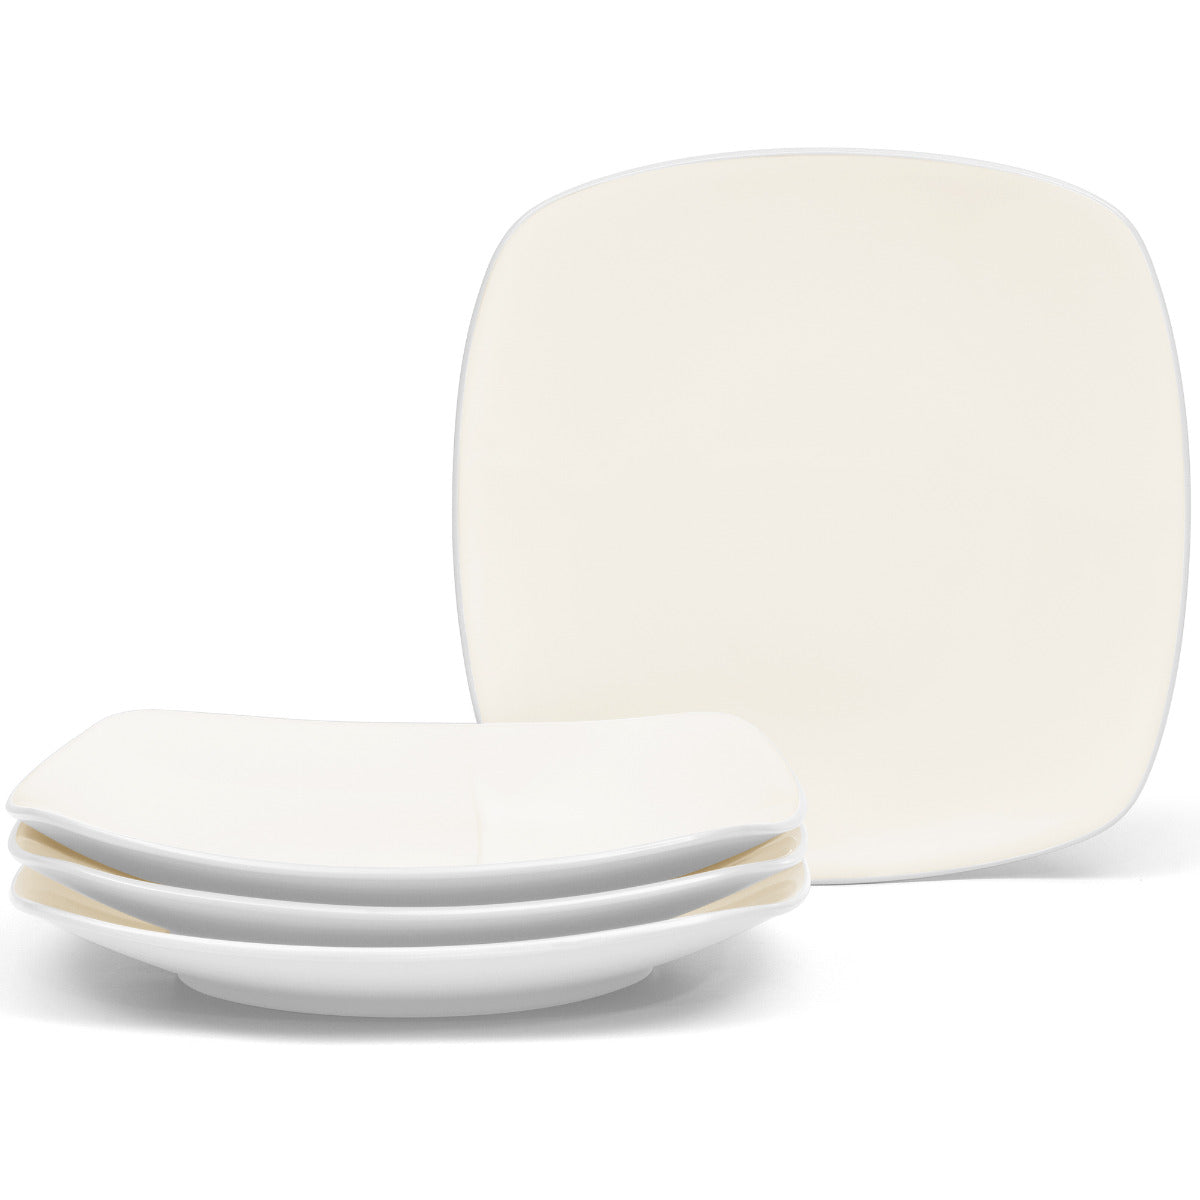 Noritake White Colorwave Square Dinnerware Set